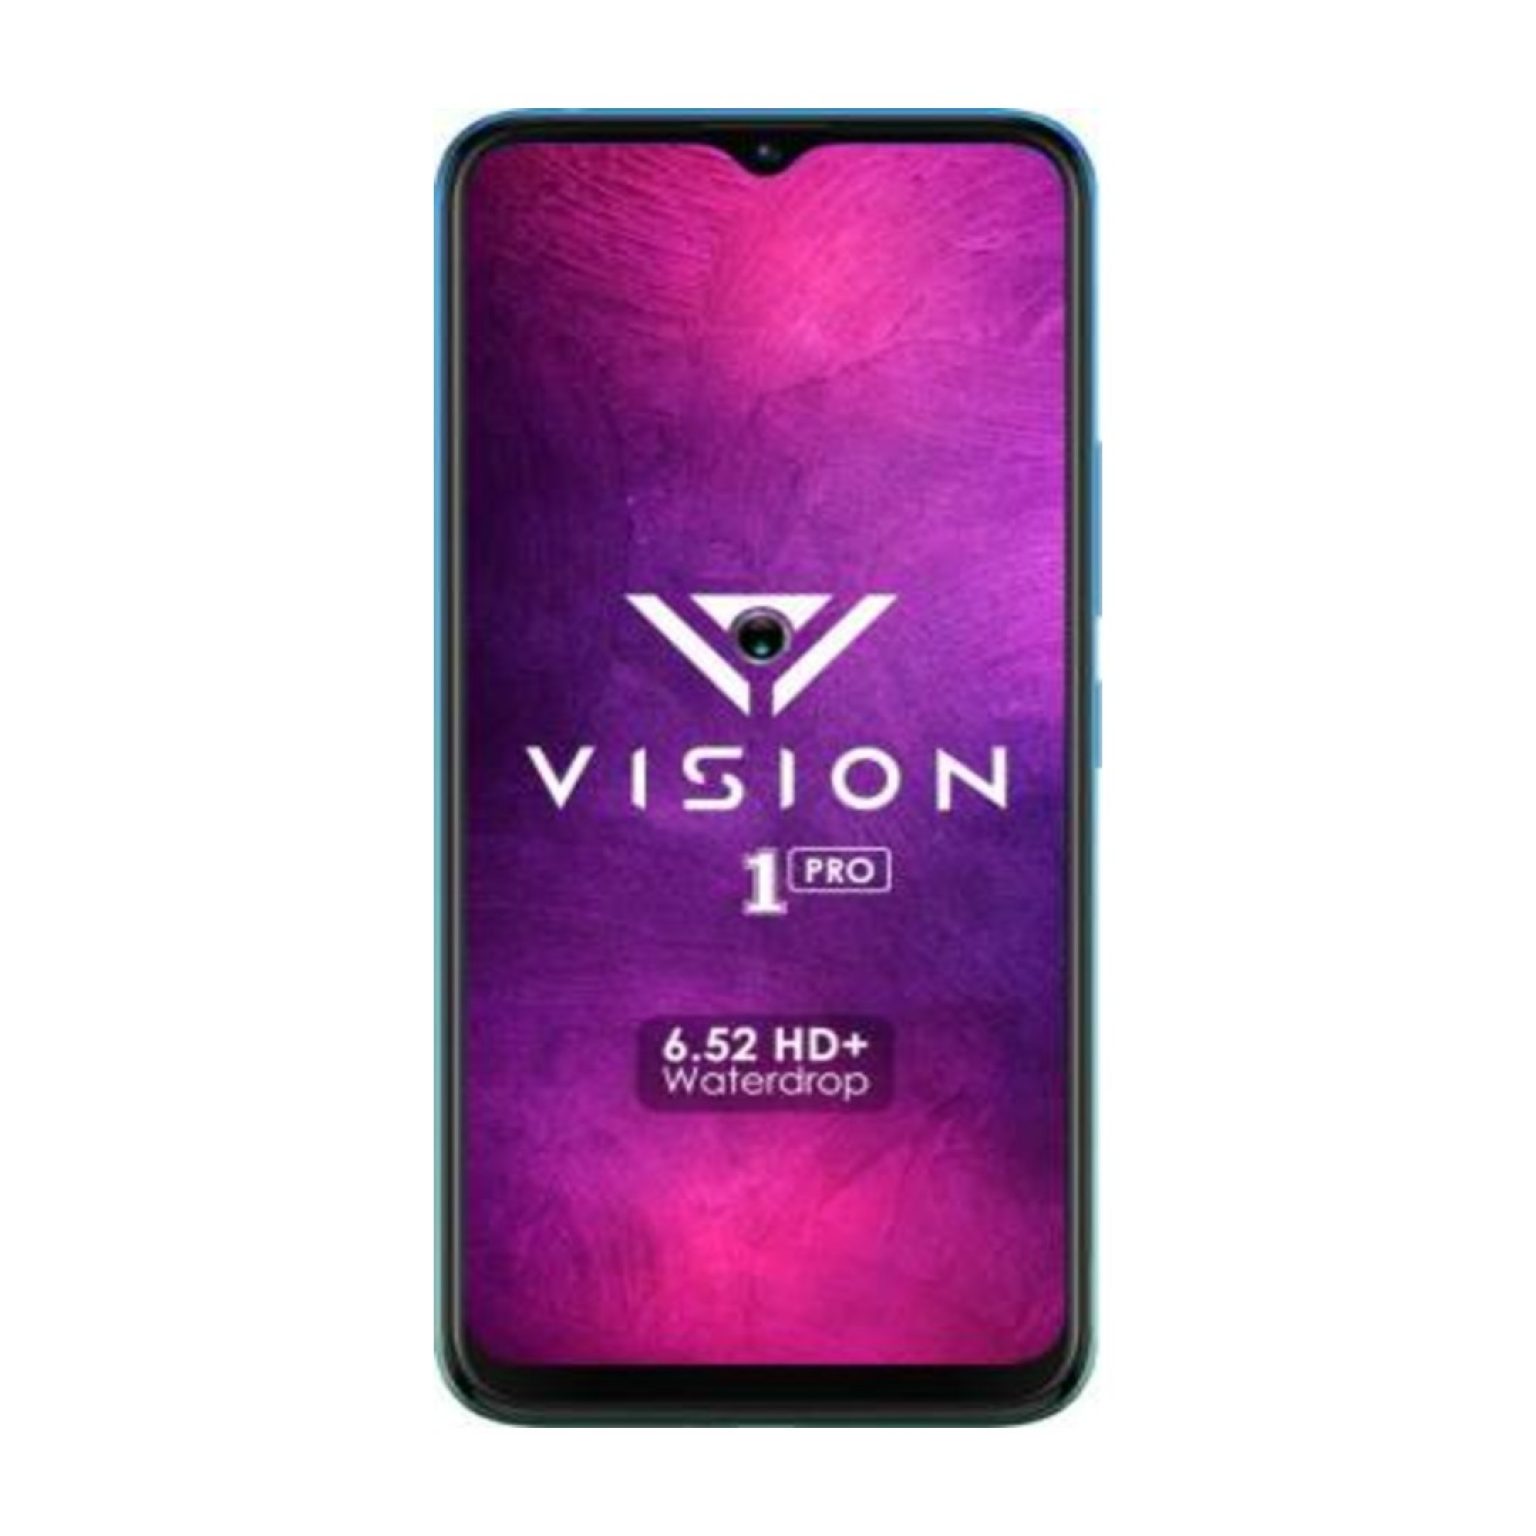 Itel vision 1 pro (AURORA BLUE, 32 GB) (2 GB RAM) - New Nellai Mobiles